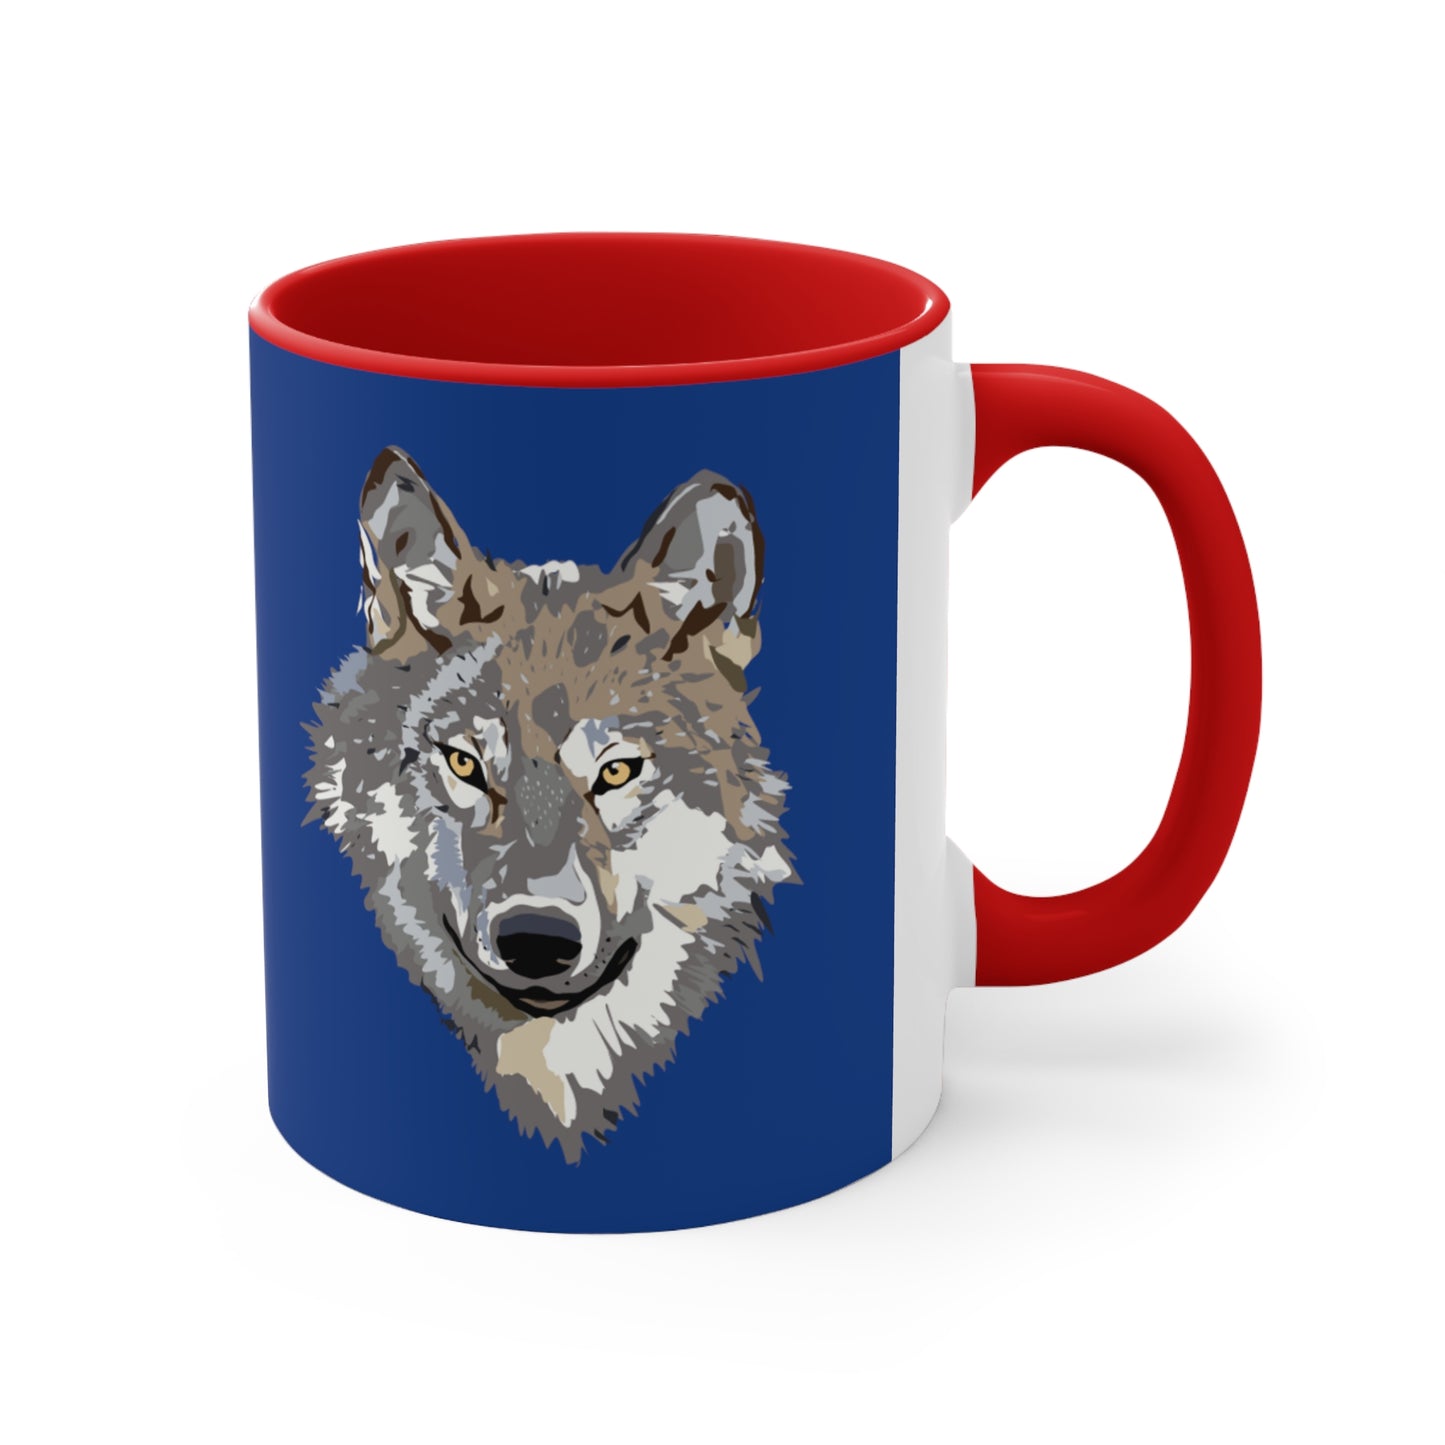 Accent Coffee Mug, 11oz: Wolves Dark Blue